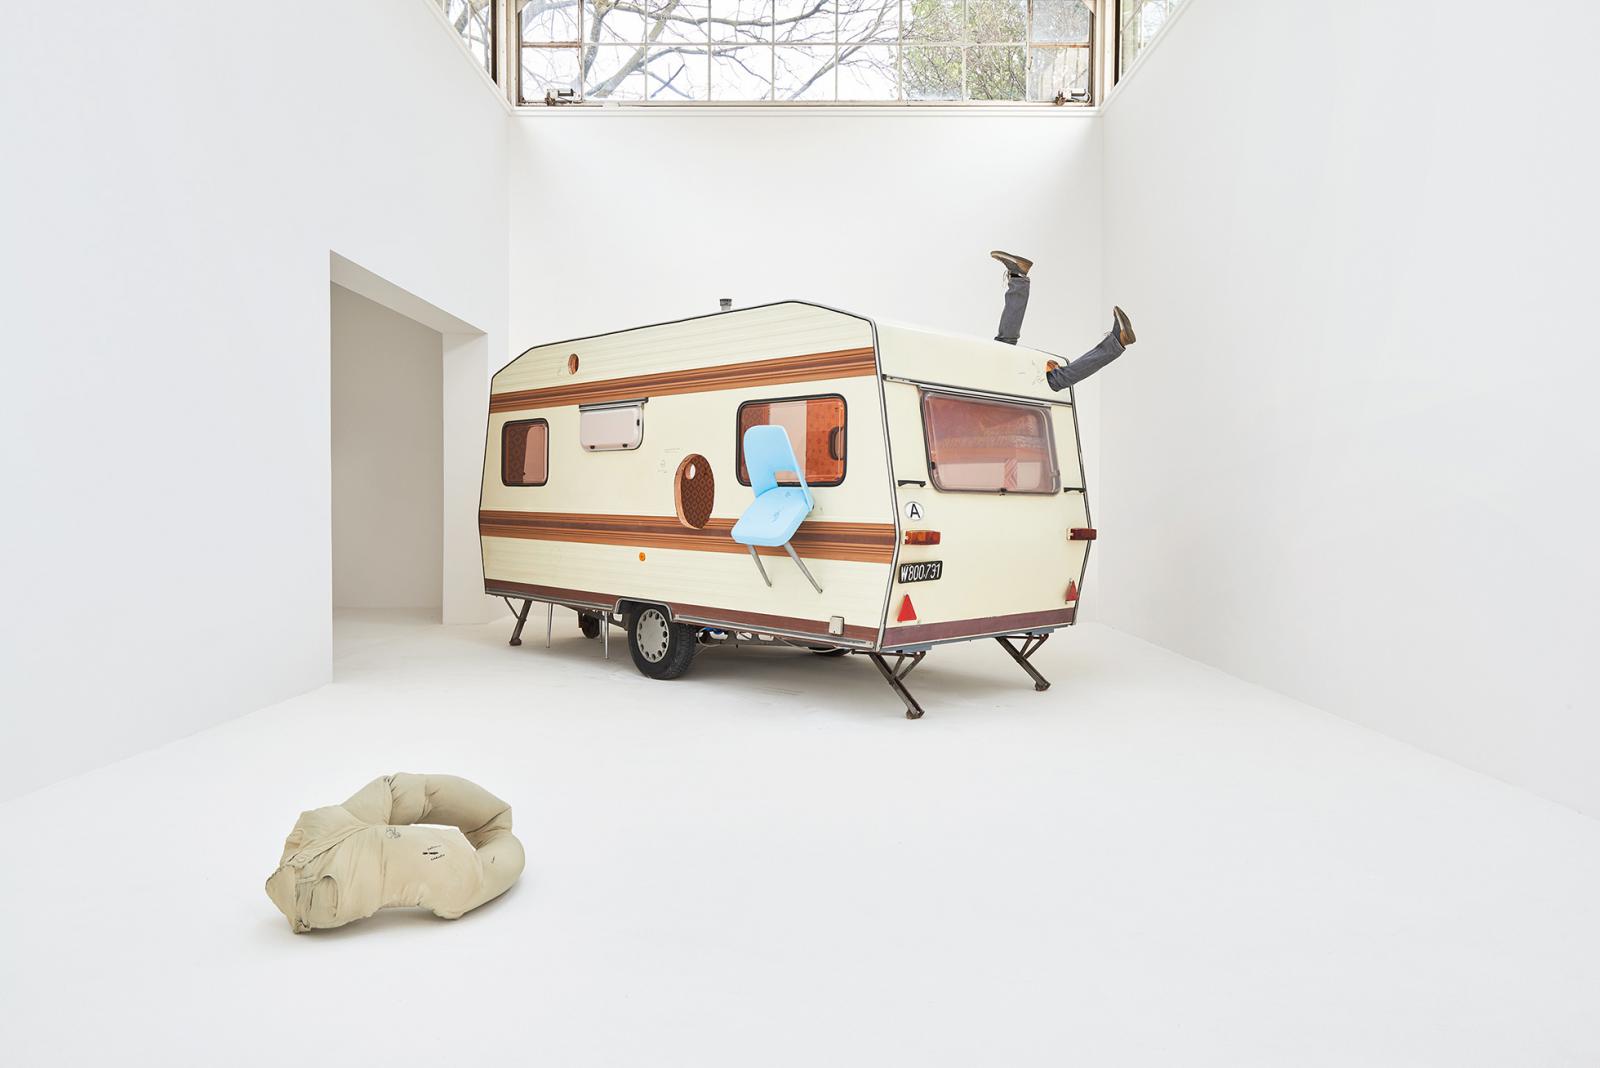 Biennale di Venezia: Эрвин Вурм, Австрия и русский грузовик